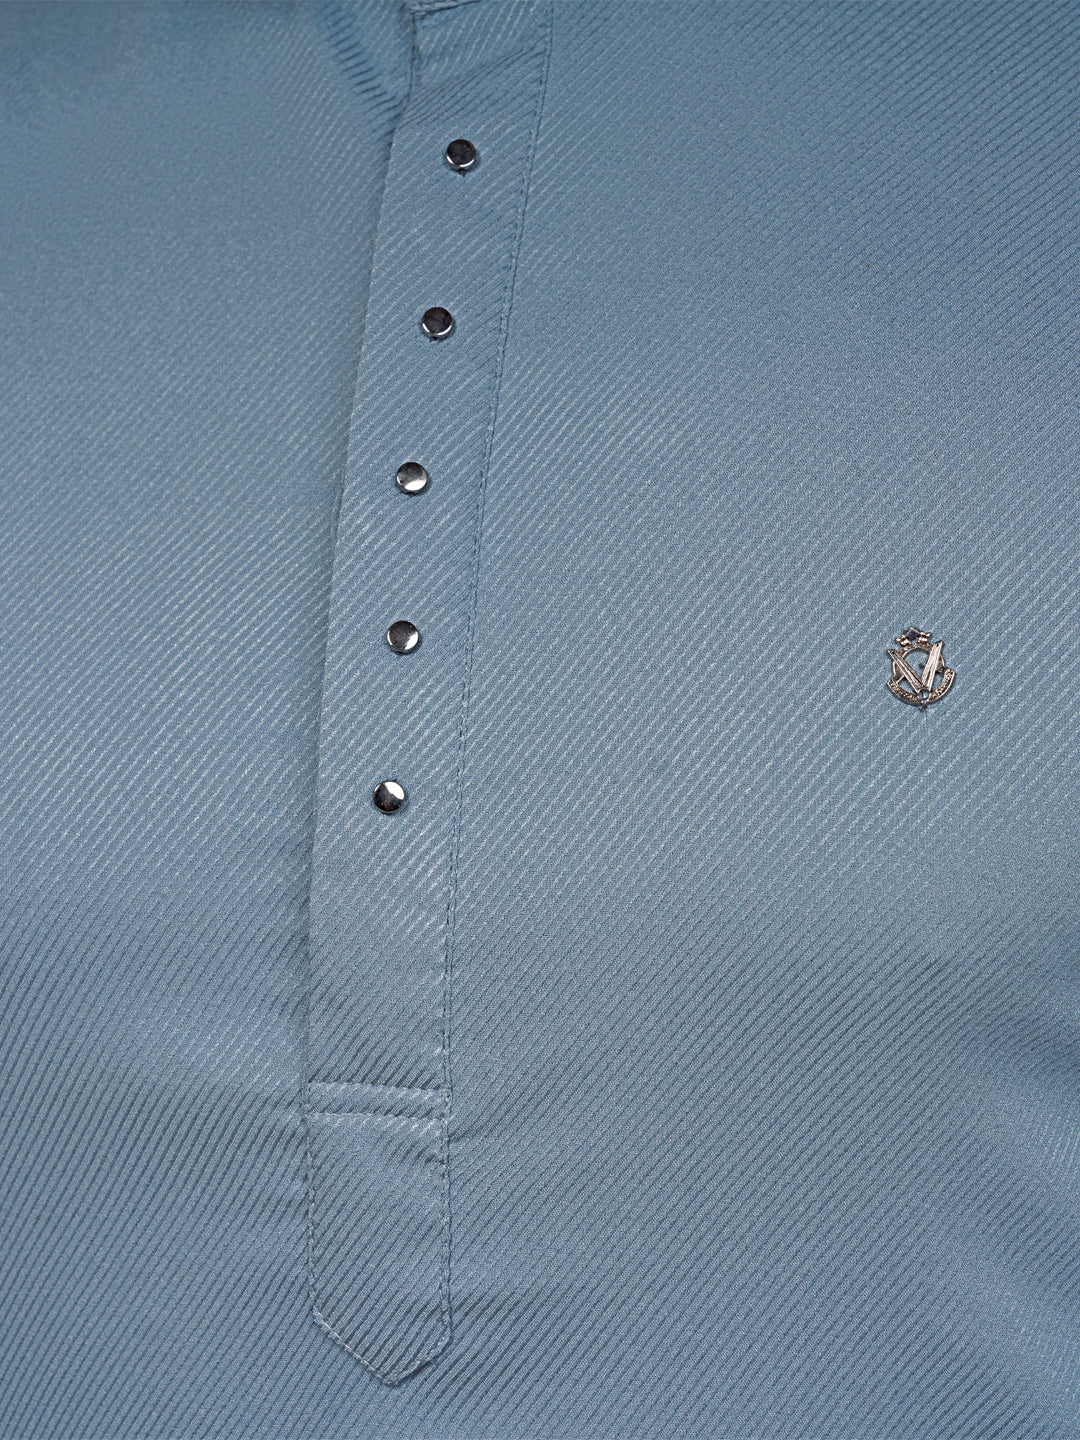 Black and White Men's Designer Short Kurta with Metal Buttons Light Grey